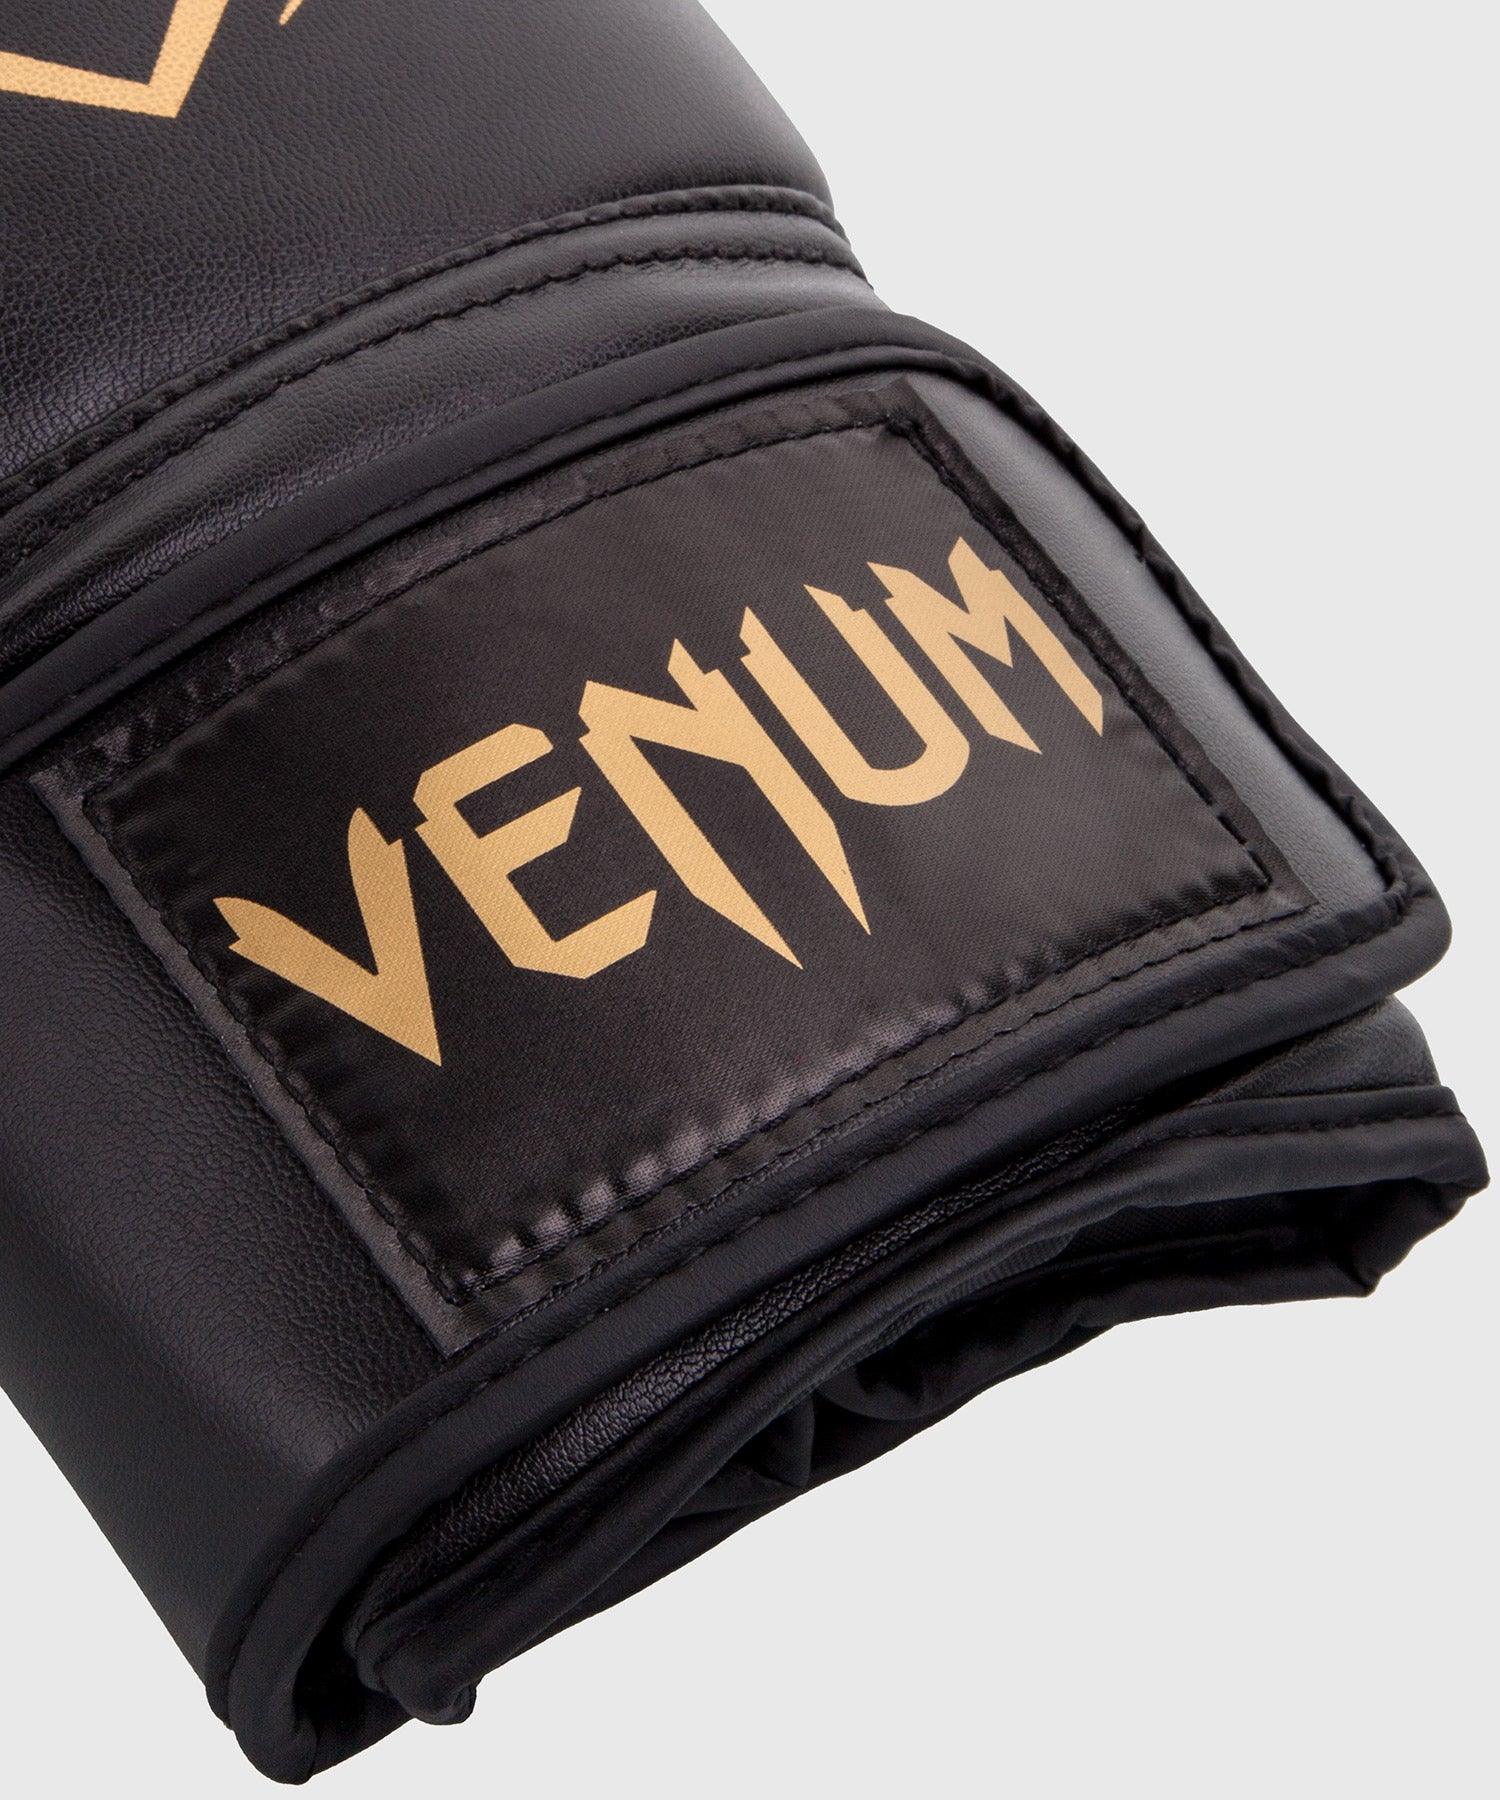 Venum Contender Boxing Gloves - Black/Gold Picture 4